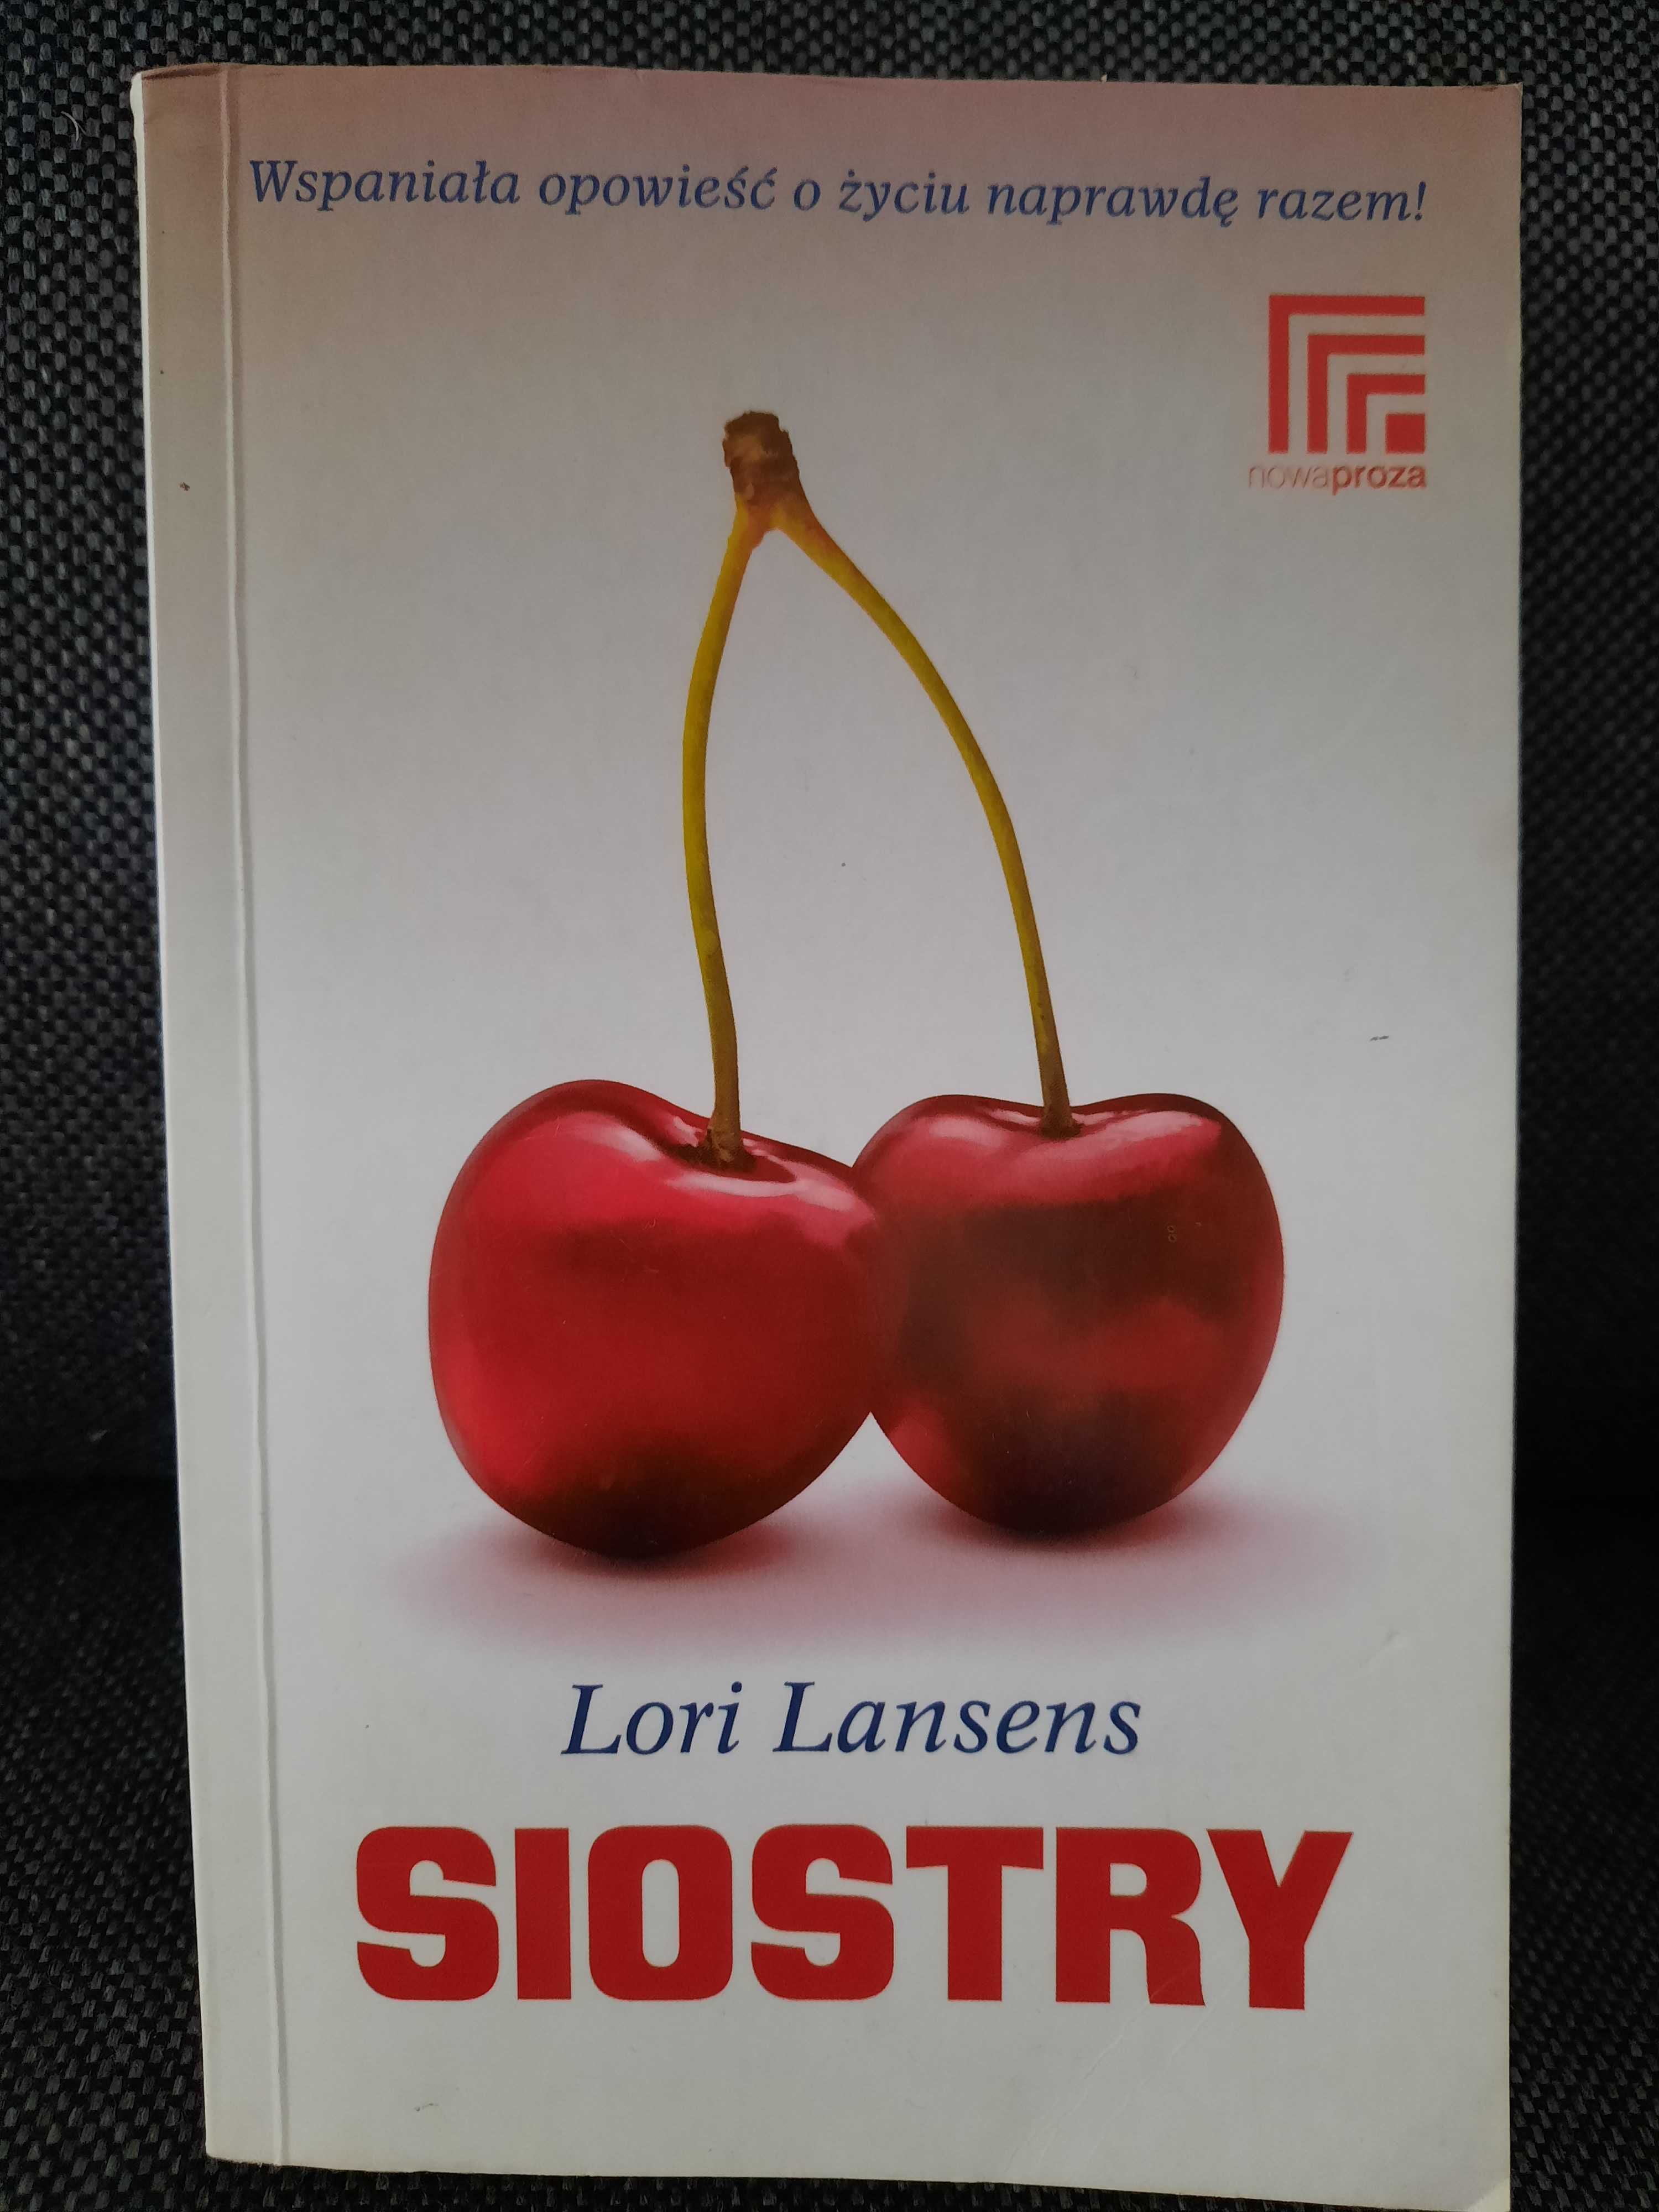 " Siostry" Lori Lansens